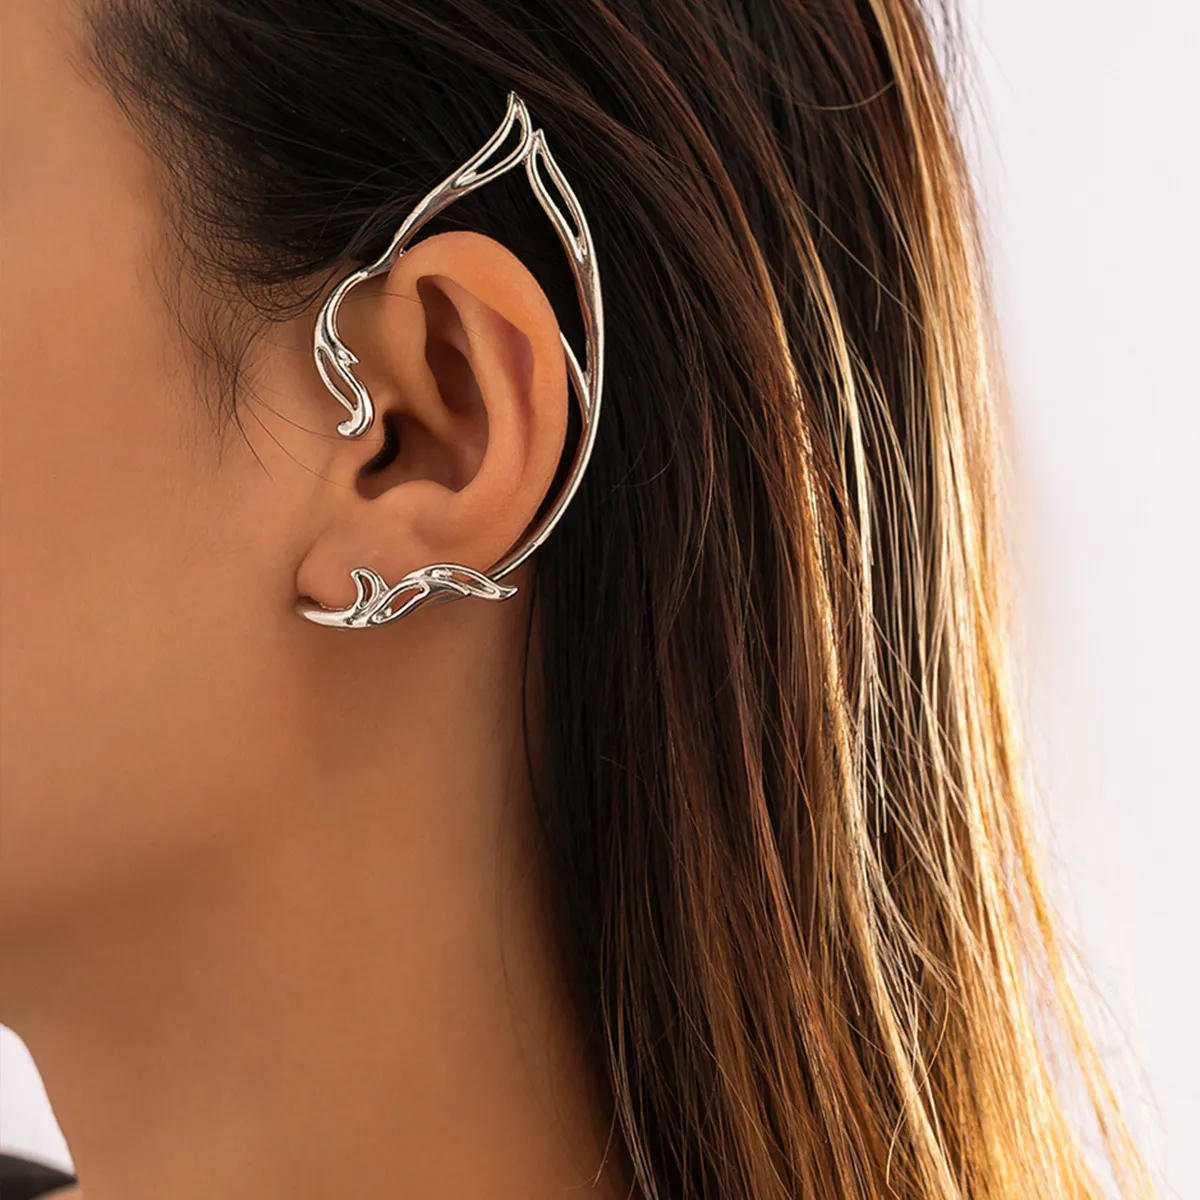 S3167 Fashion Jewelry Retro Metal Cat Ears Cuff Hang No Hole Single Piece Ear Clip Earrings